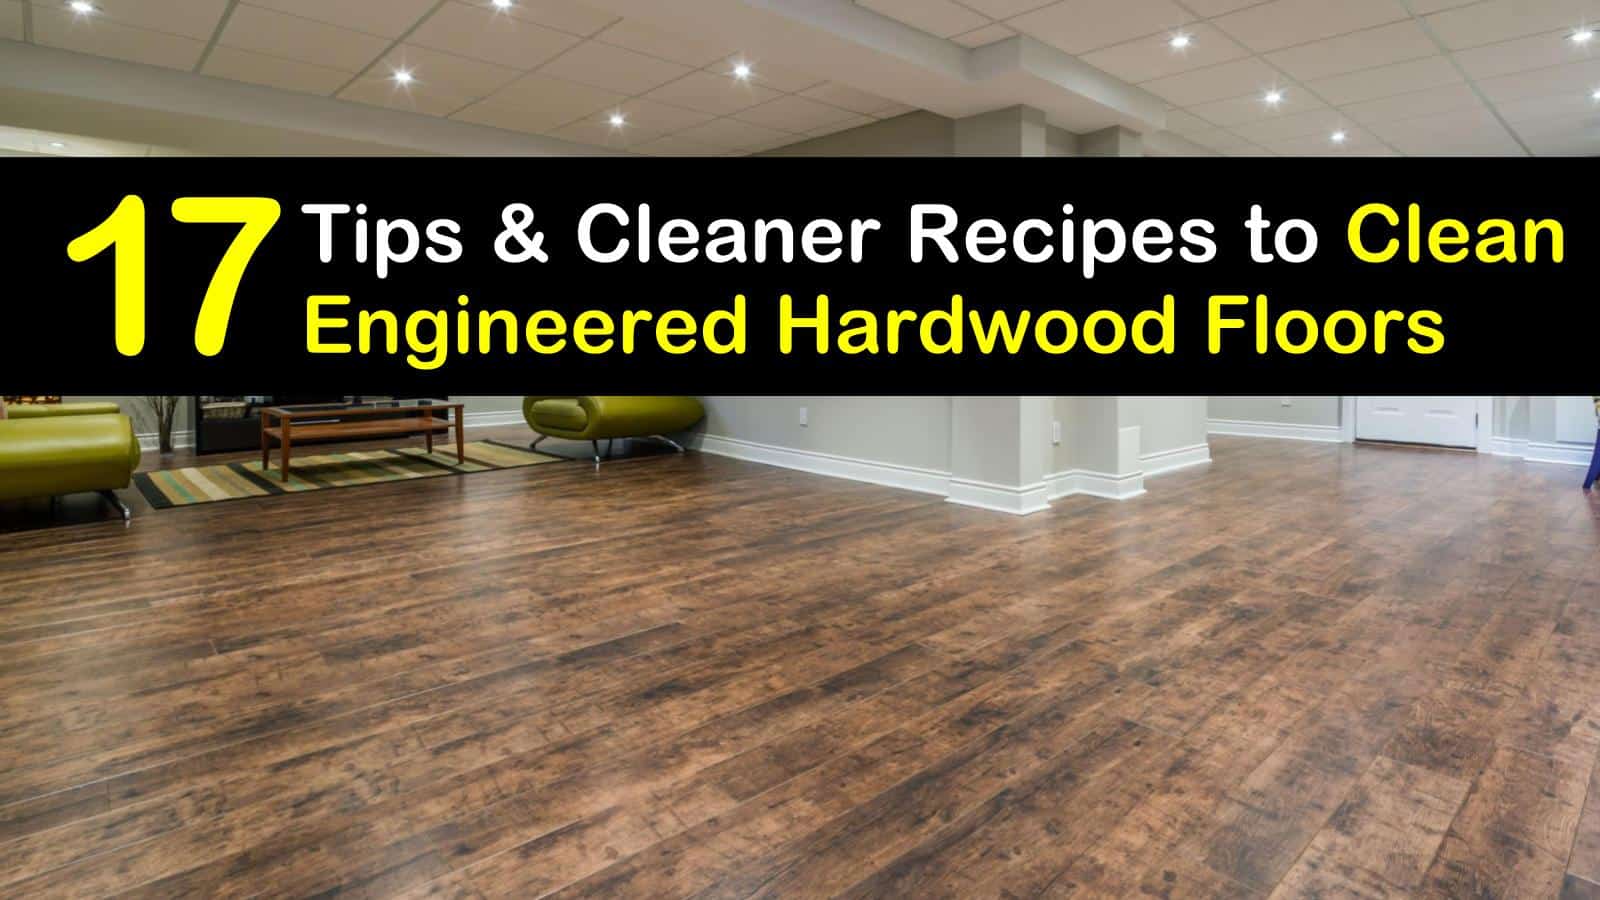 Clean Engineered Hardwood Floors, How To Clean Dull Hardwood Floors